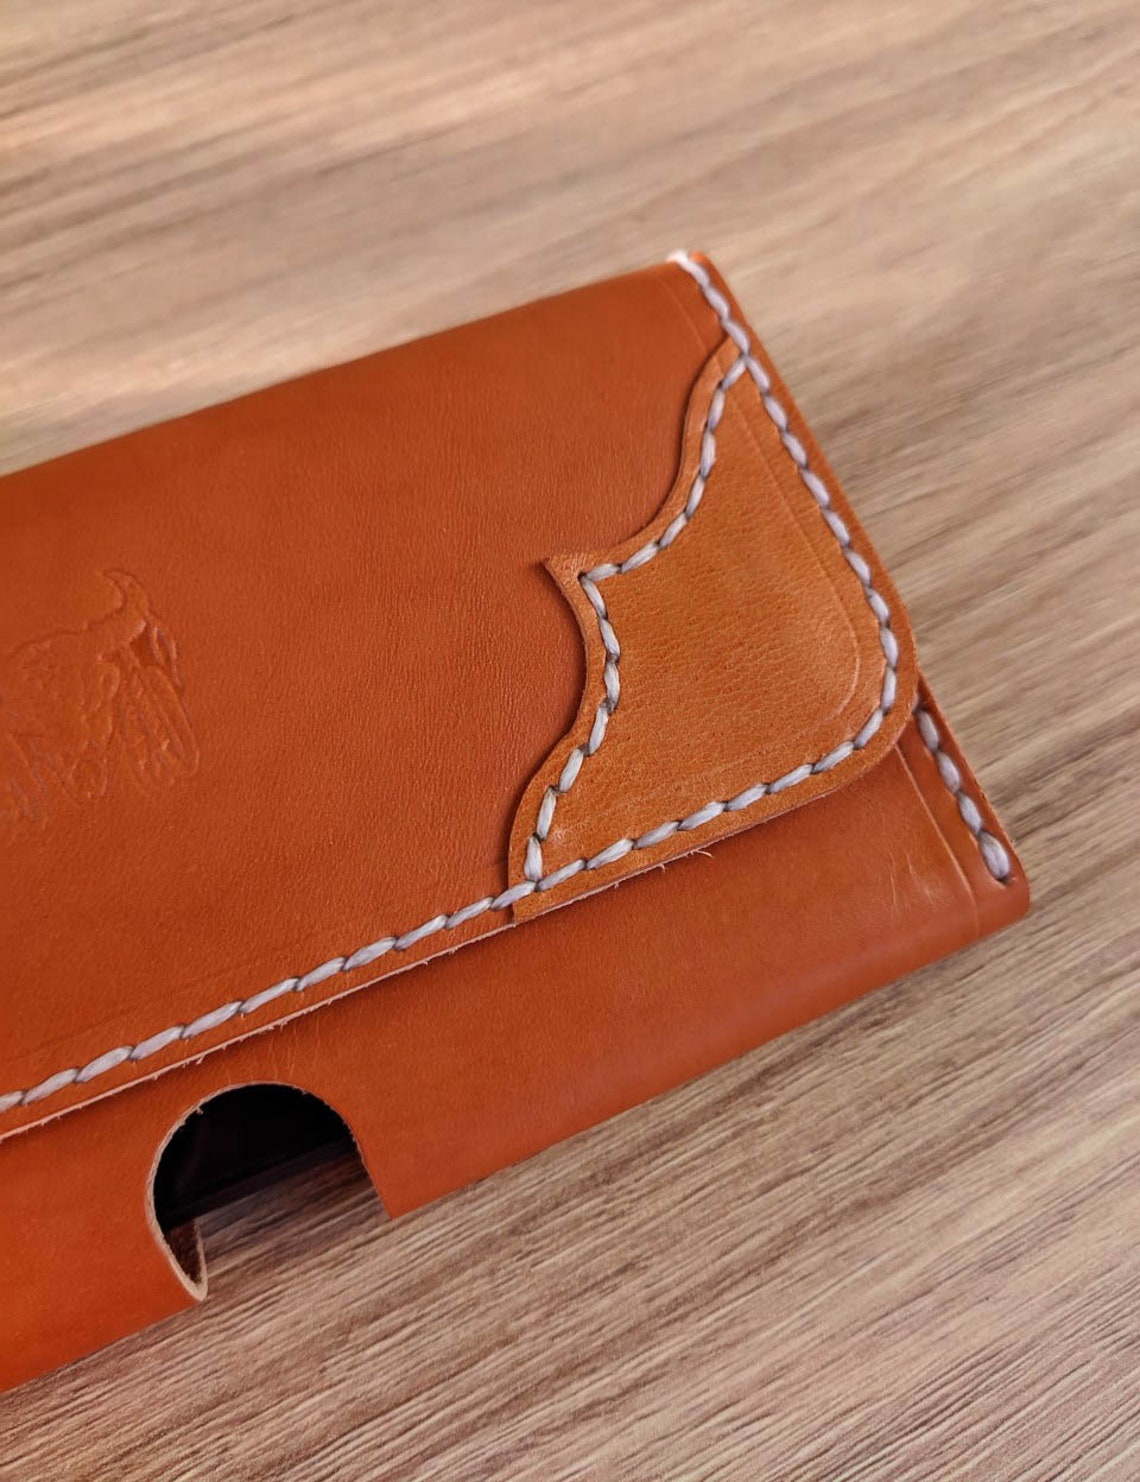 Leather Belt Case Smartphone Holder Personalized Leather | Etsy